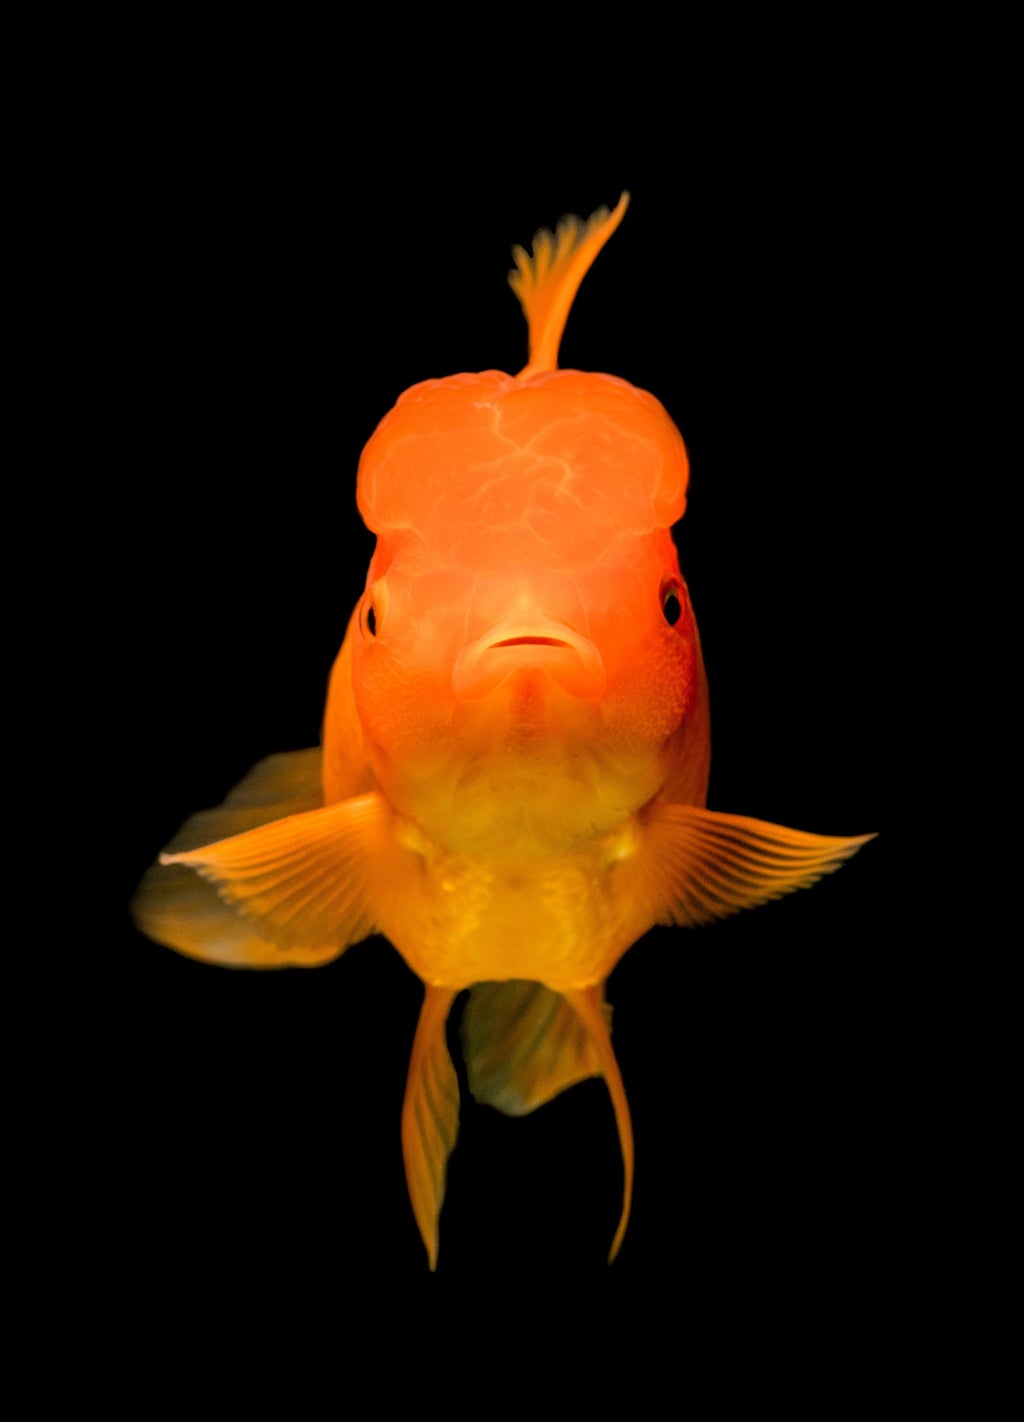 gold fish photo